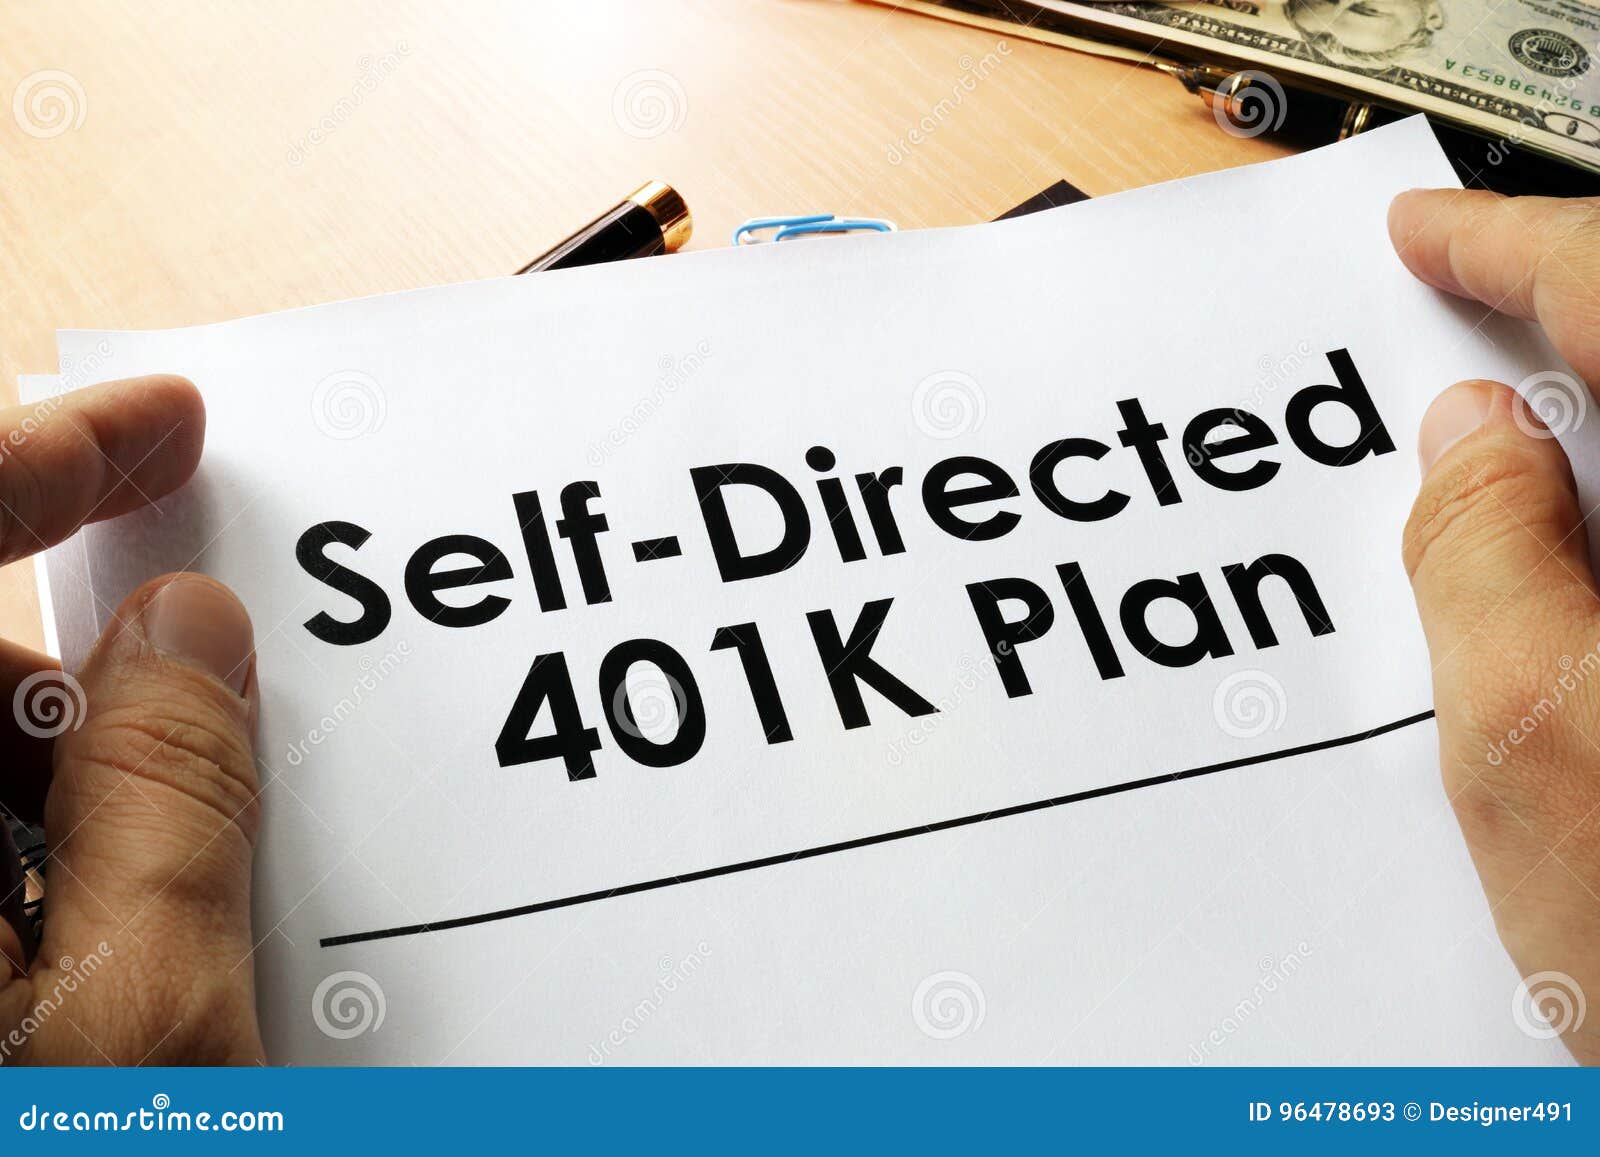 self directed 401k plan.